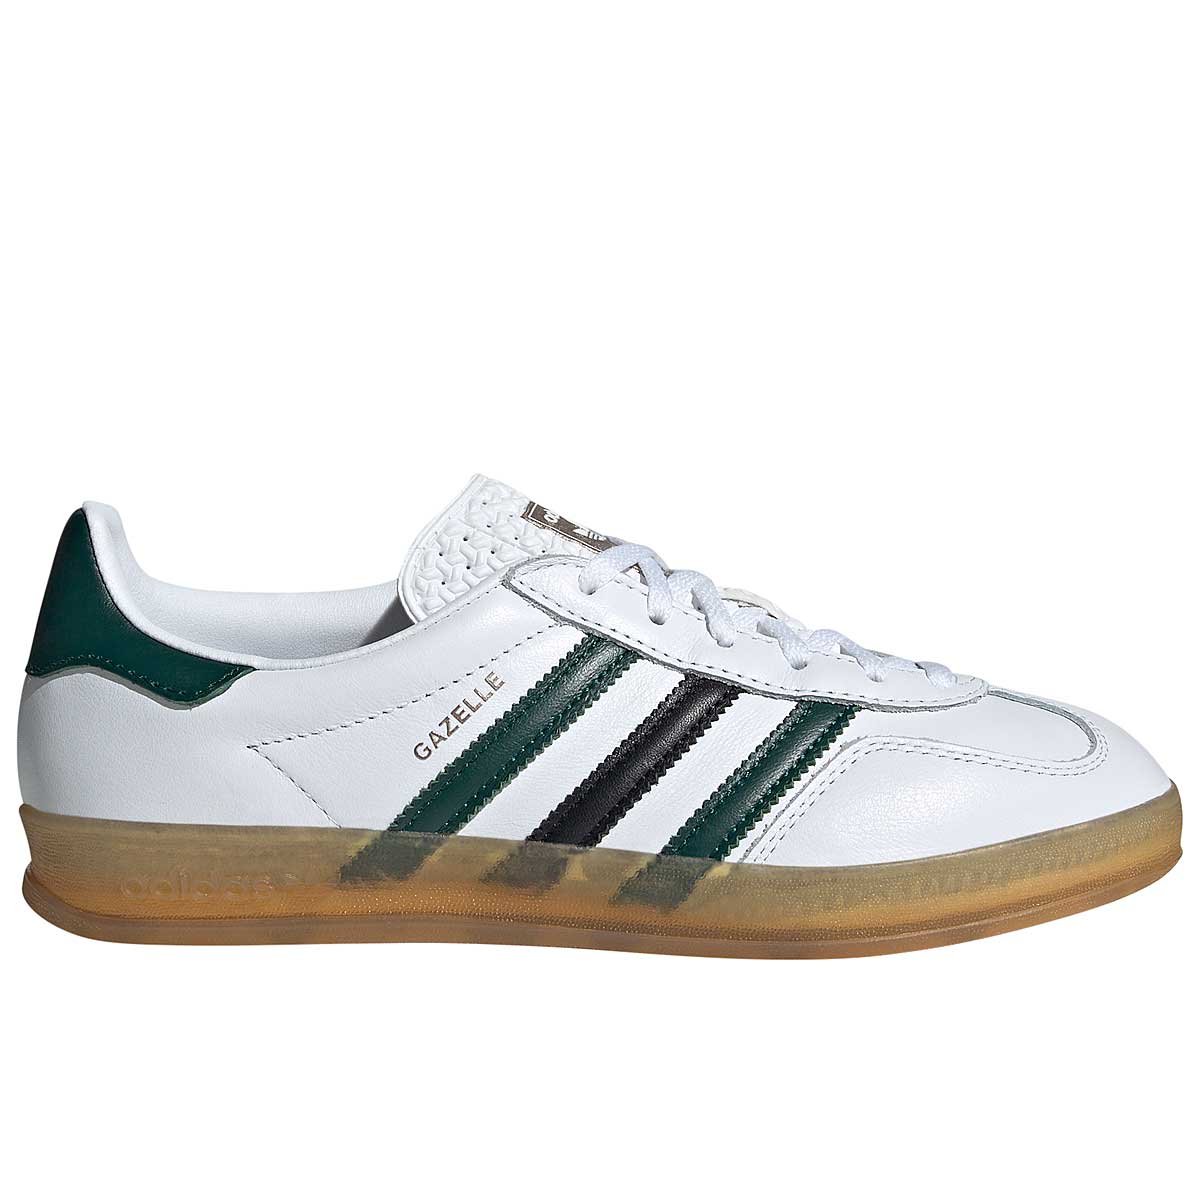 Adidas Gazelle Indoor W, White/green/black EU42 2/3